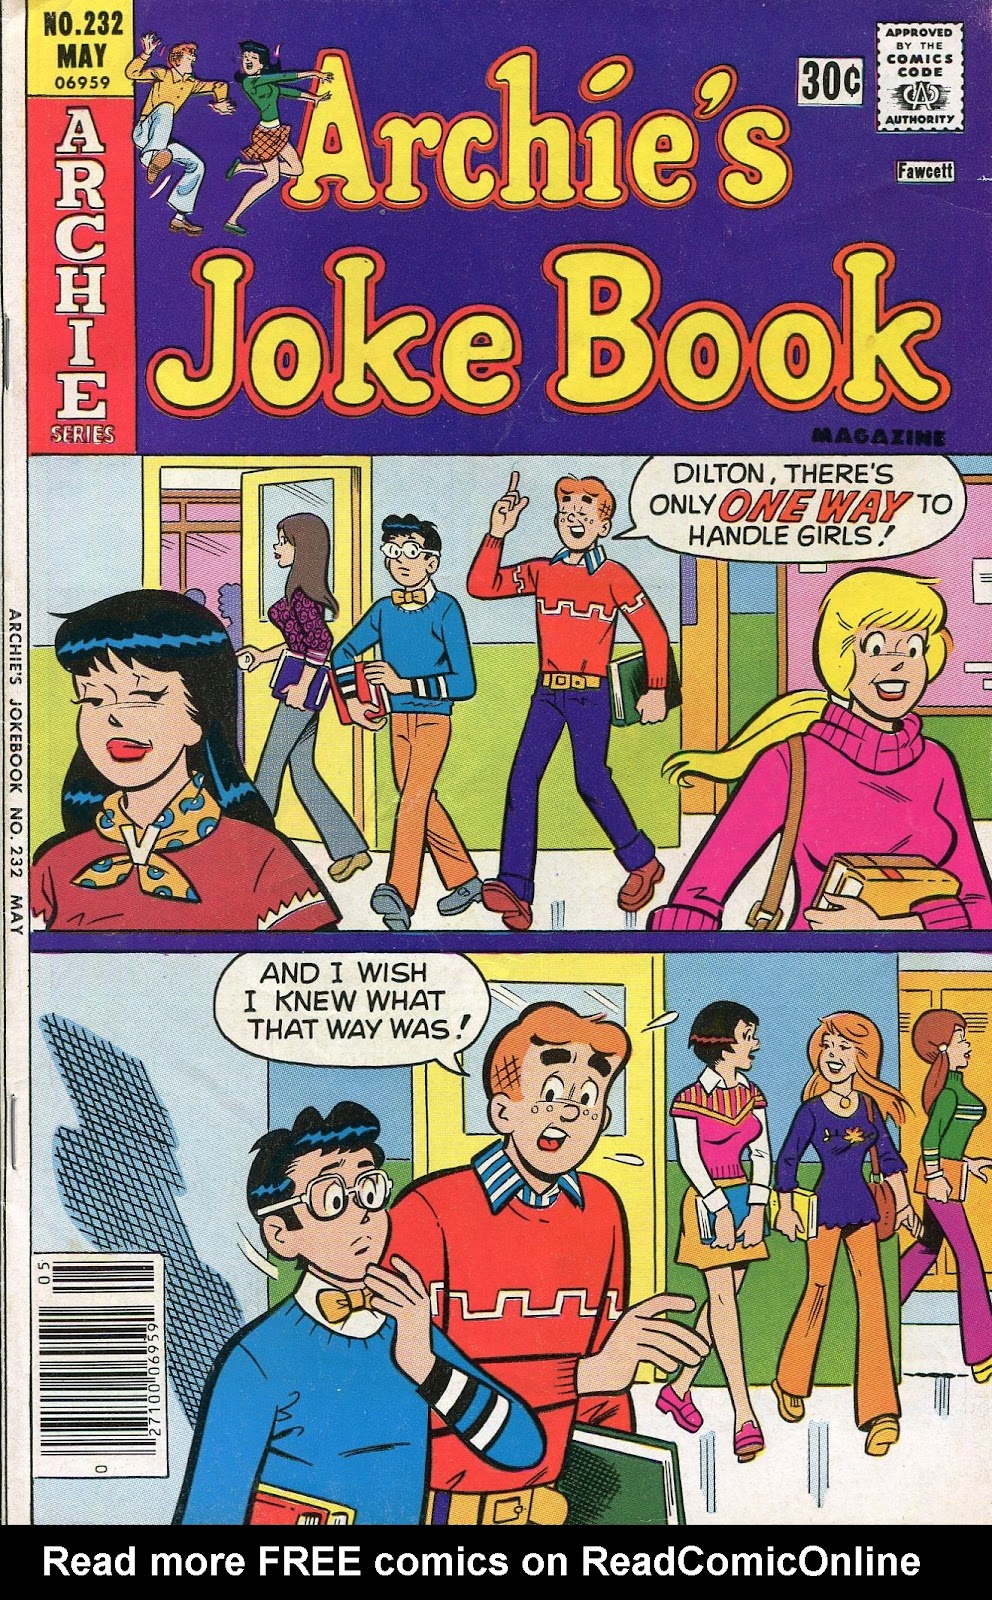 Archie's Joke Book Magazine issue 232 - Page 1